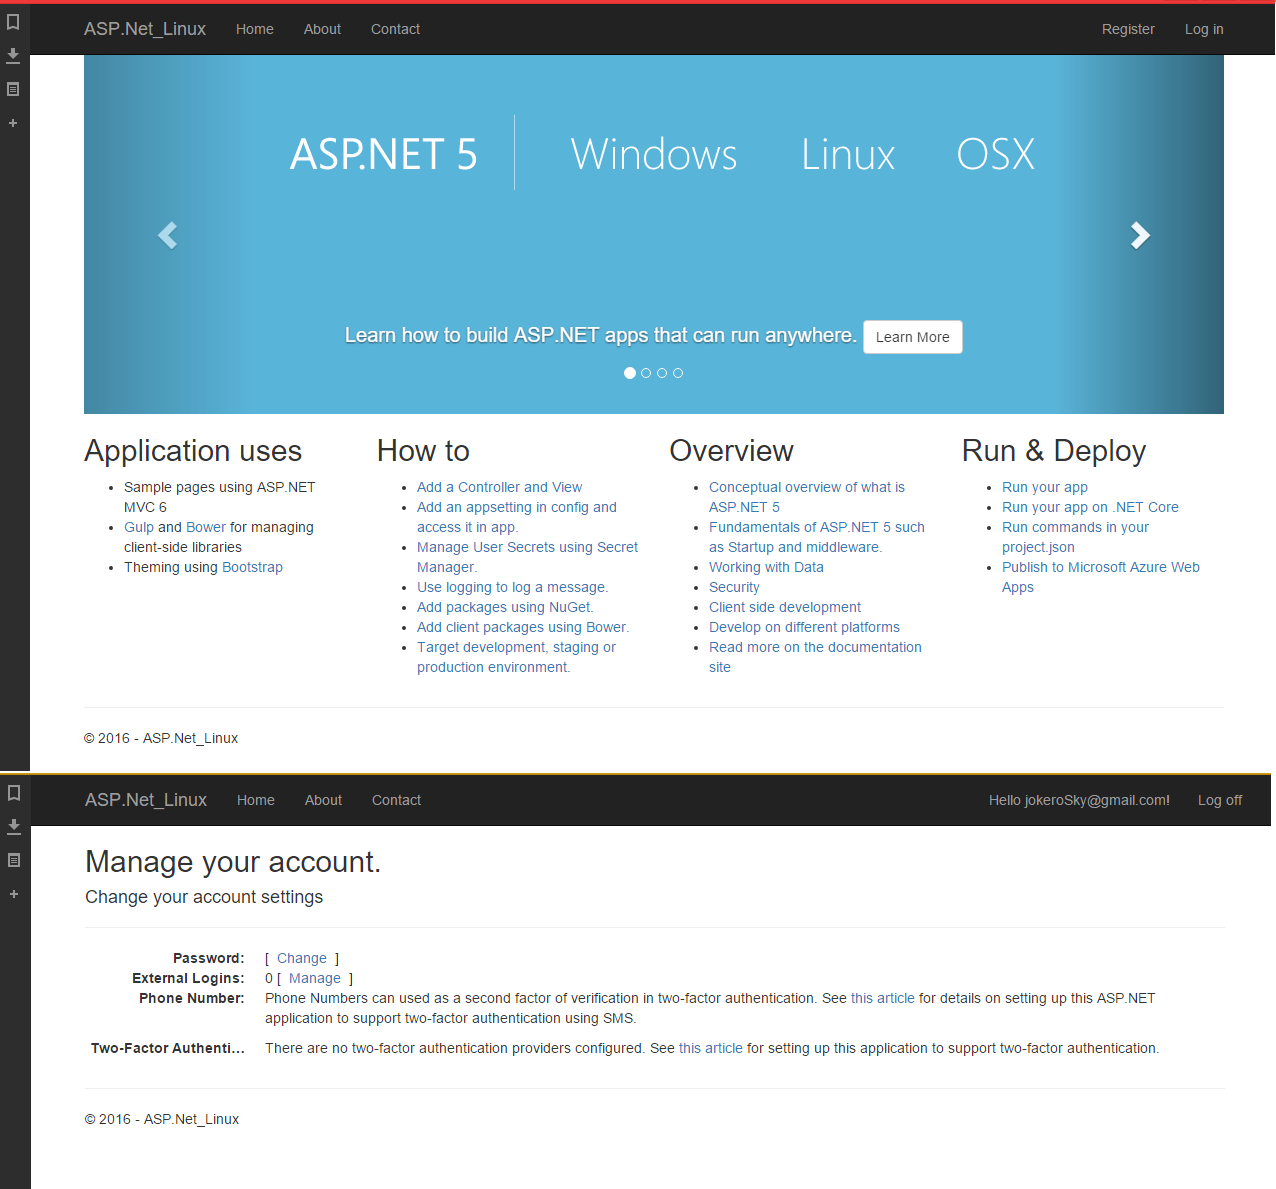 Подготовка ASP.NET 5 (Core) проекта и DNX окружения для участия в хакатоне в рамках hack.summit() 2016 на Koding.com - 4